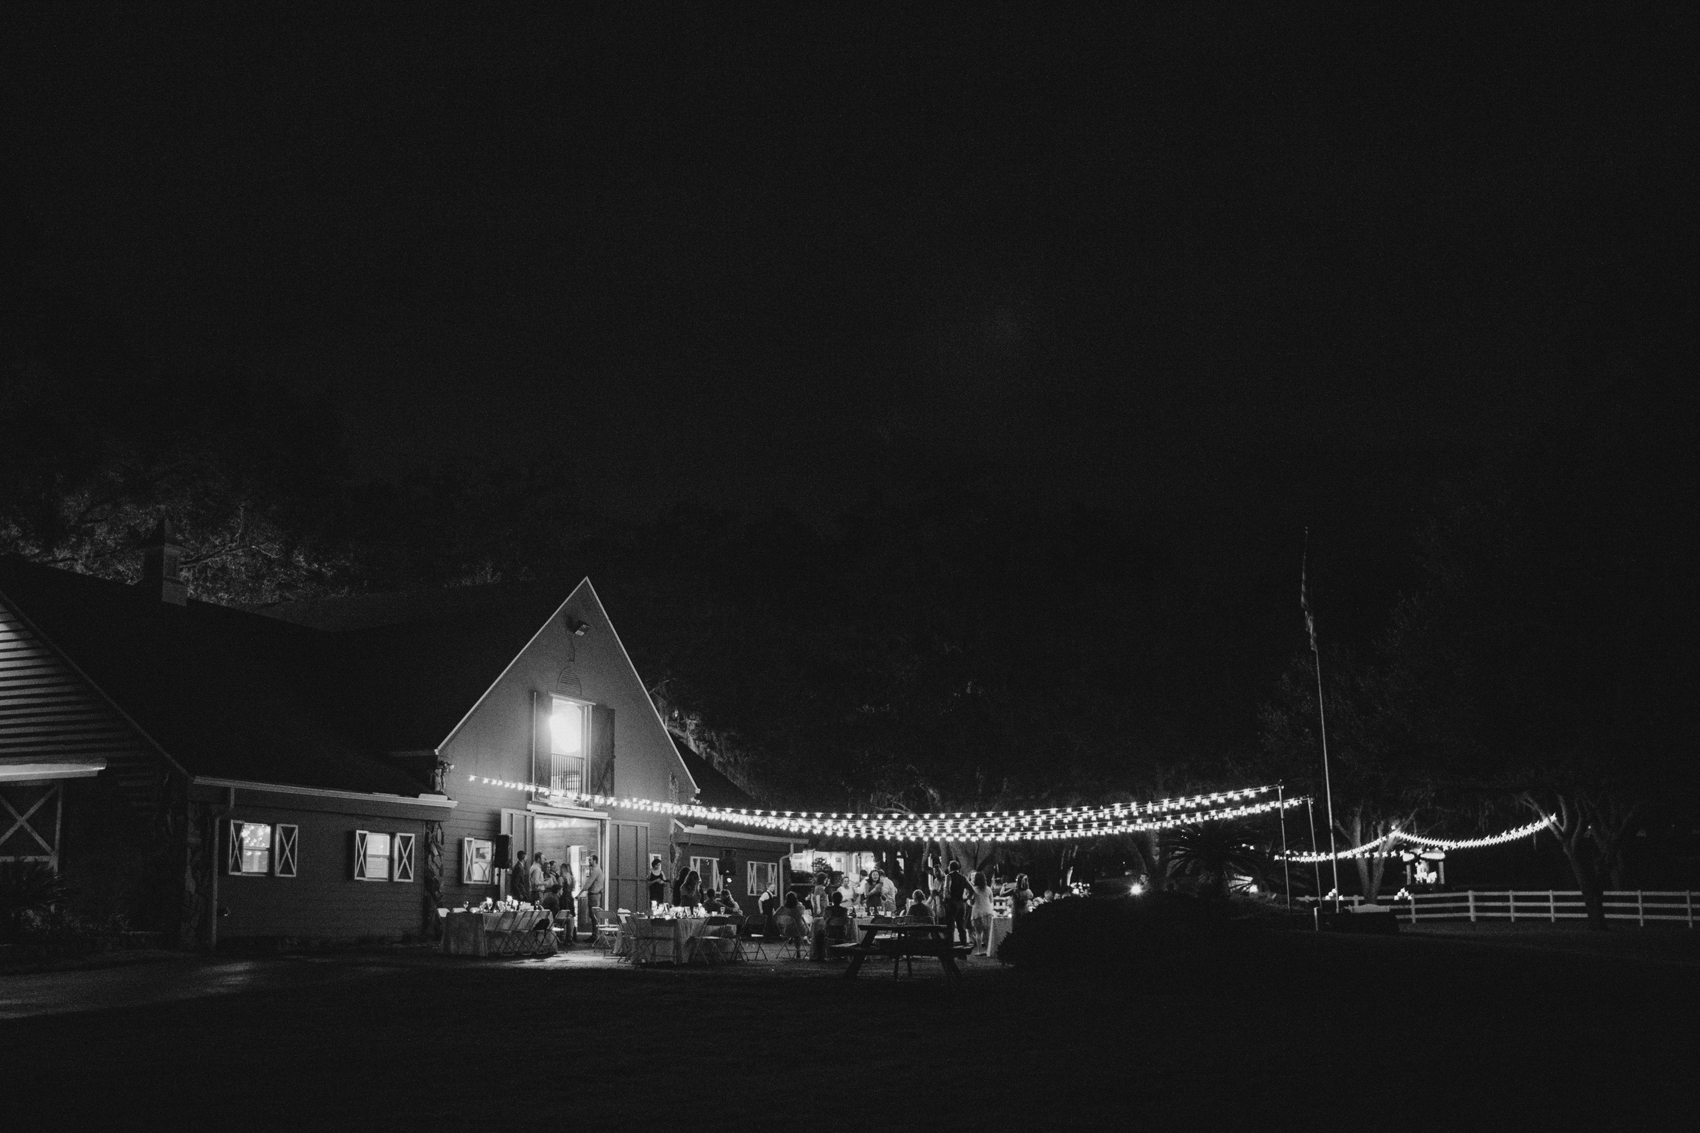 rustic florida barn wedding venue at nighttime with stringlights